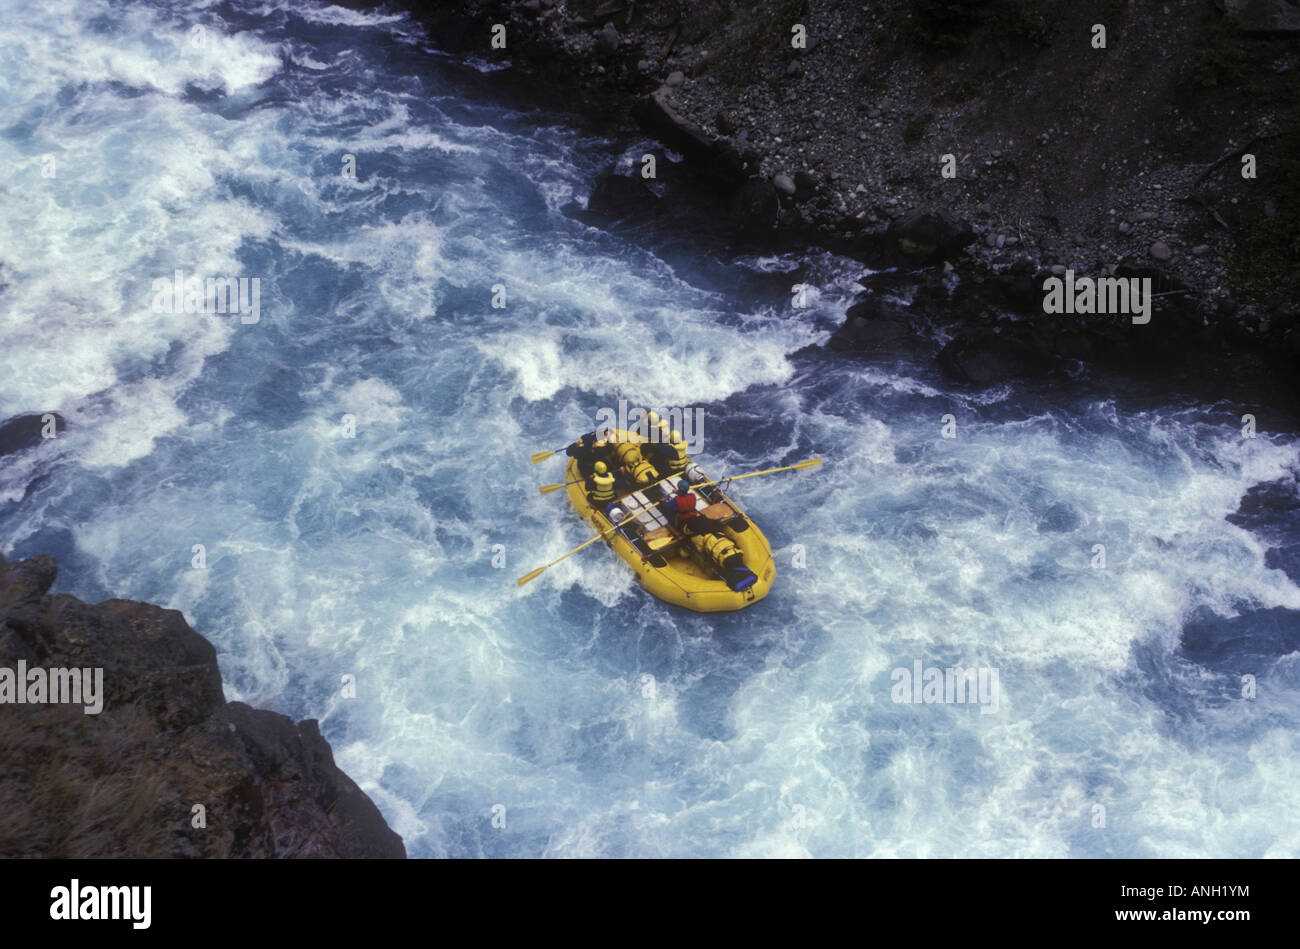 Rafting on the Chilko River, British Columbia, Canada. Stock Photo